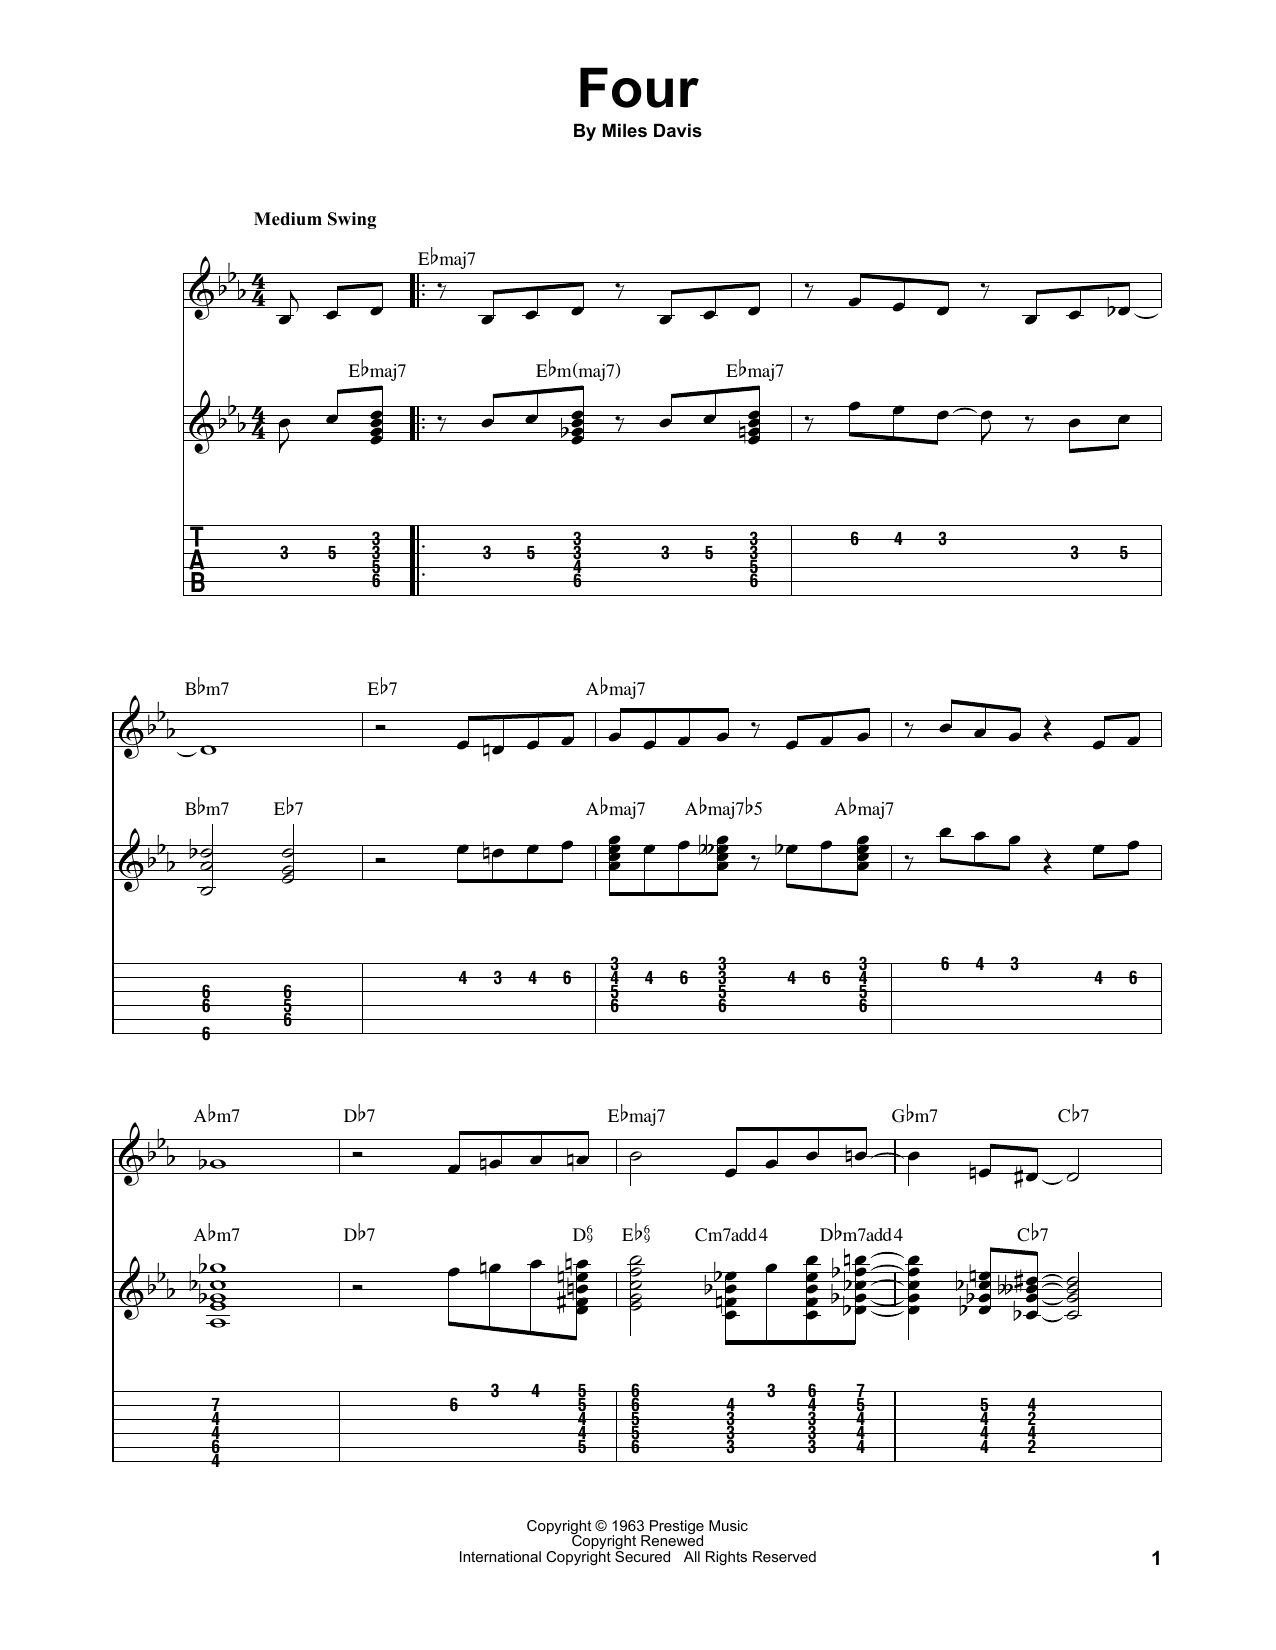 John Coltrane Four Sheet Music Notes & Chords for Guitar Tab - Download or Print PDF